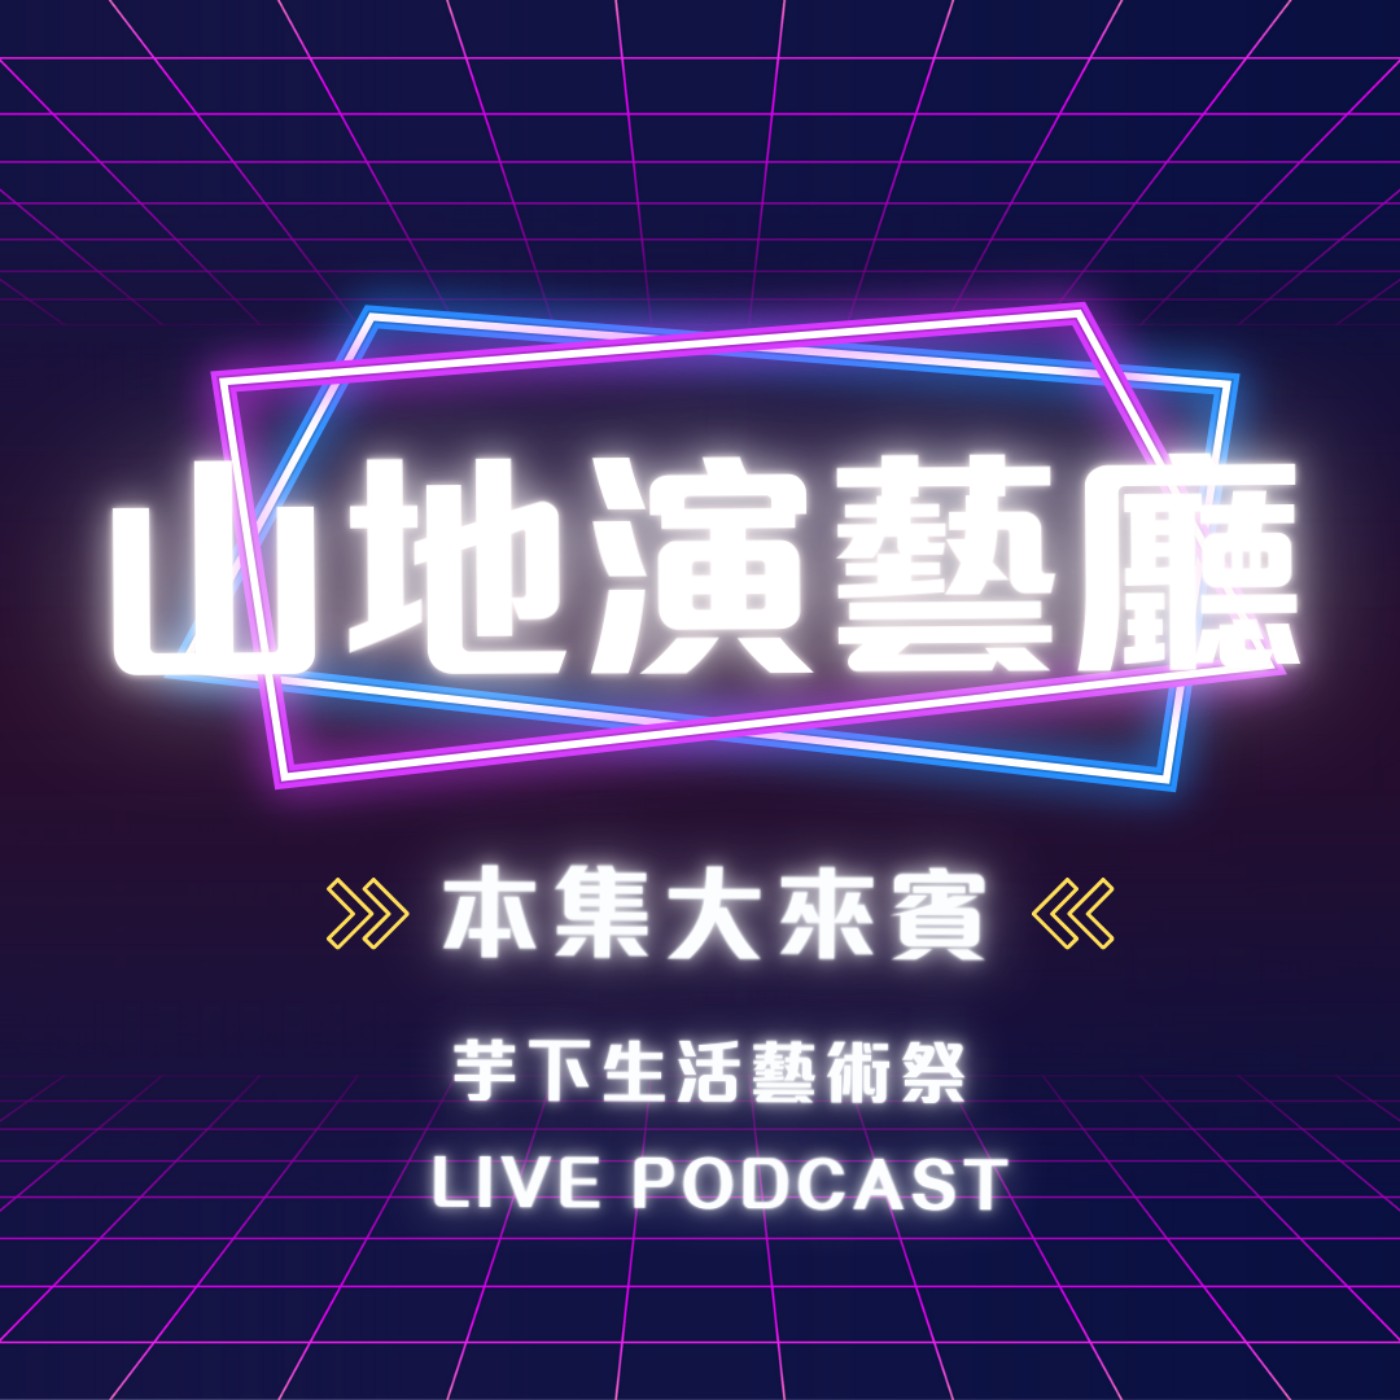 ep9.《芋下生活藝術祭》LIVE Podcast - 下